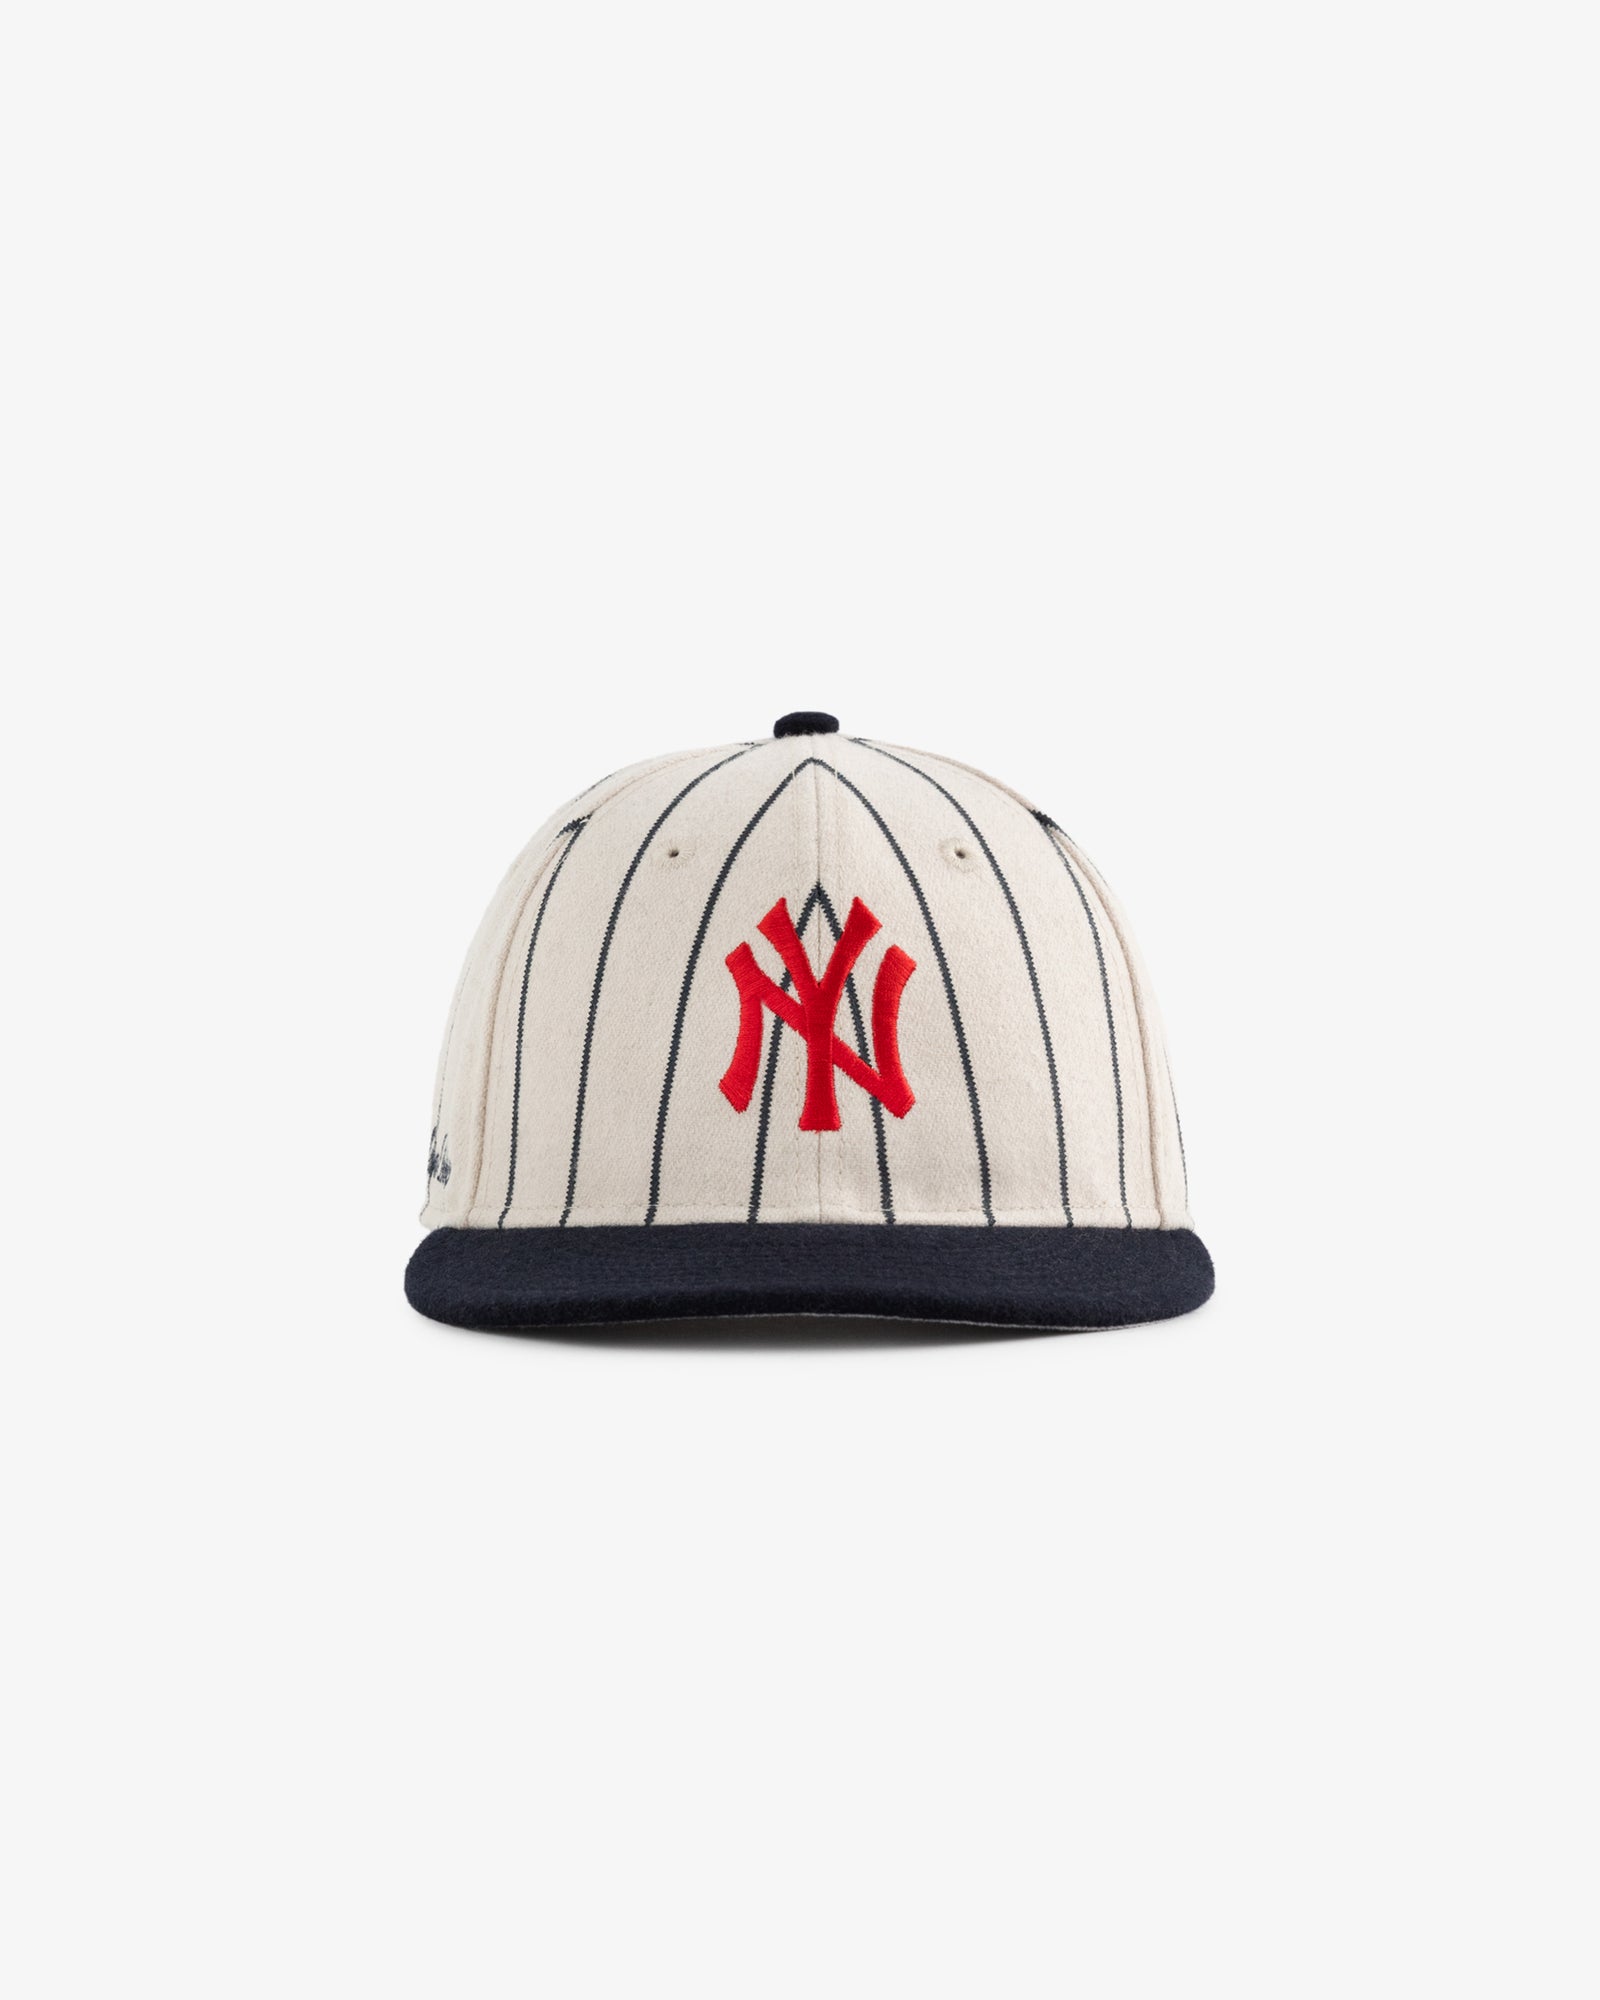 ALD New Era Wool Yankees Hat Cream